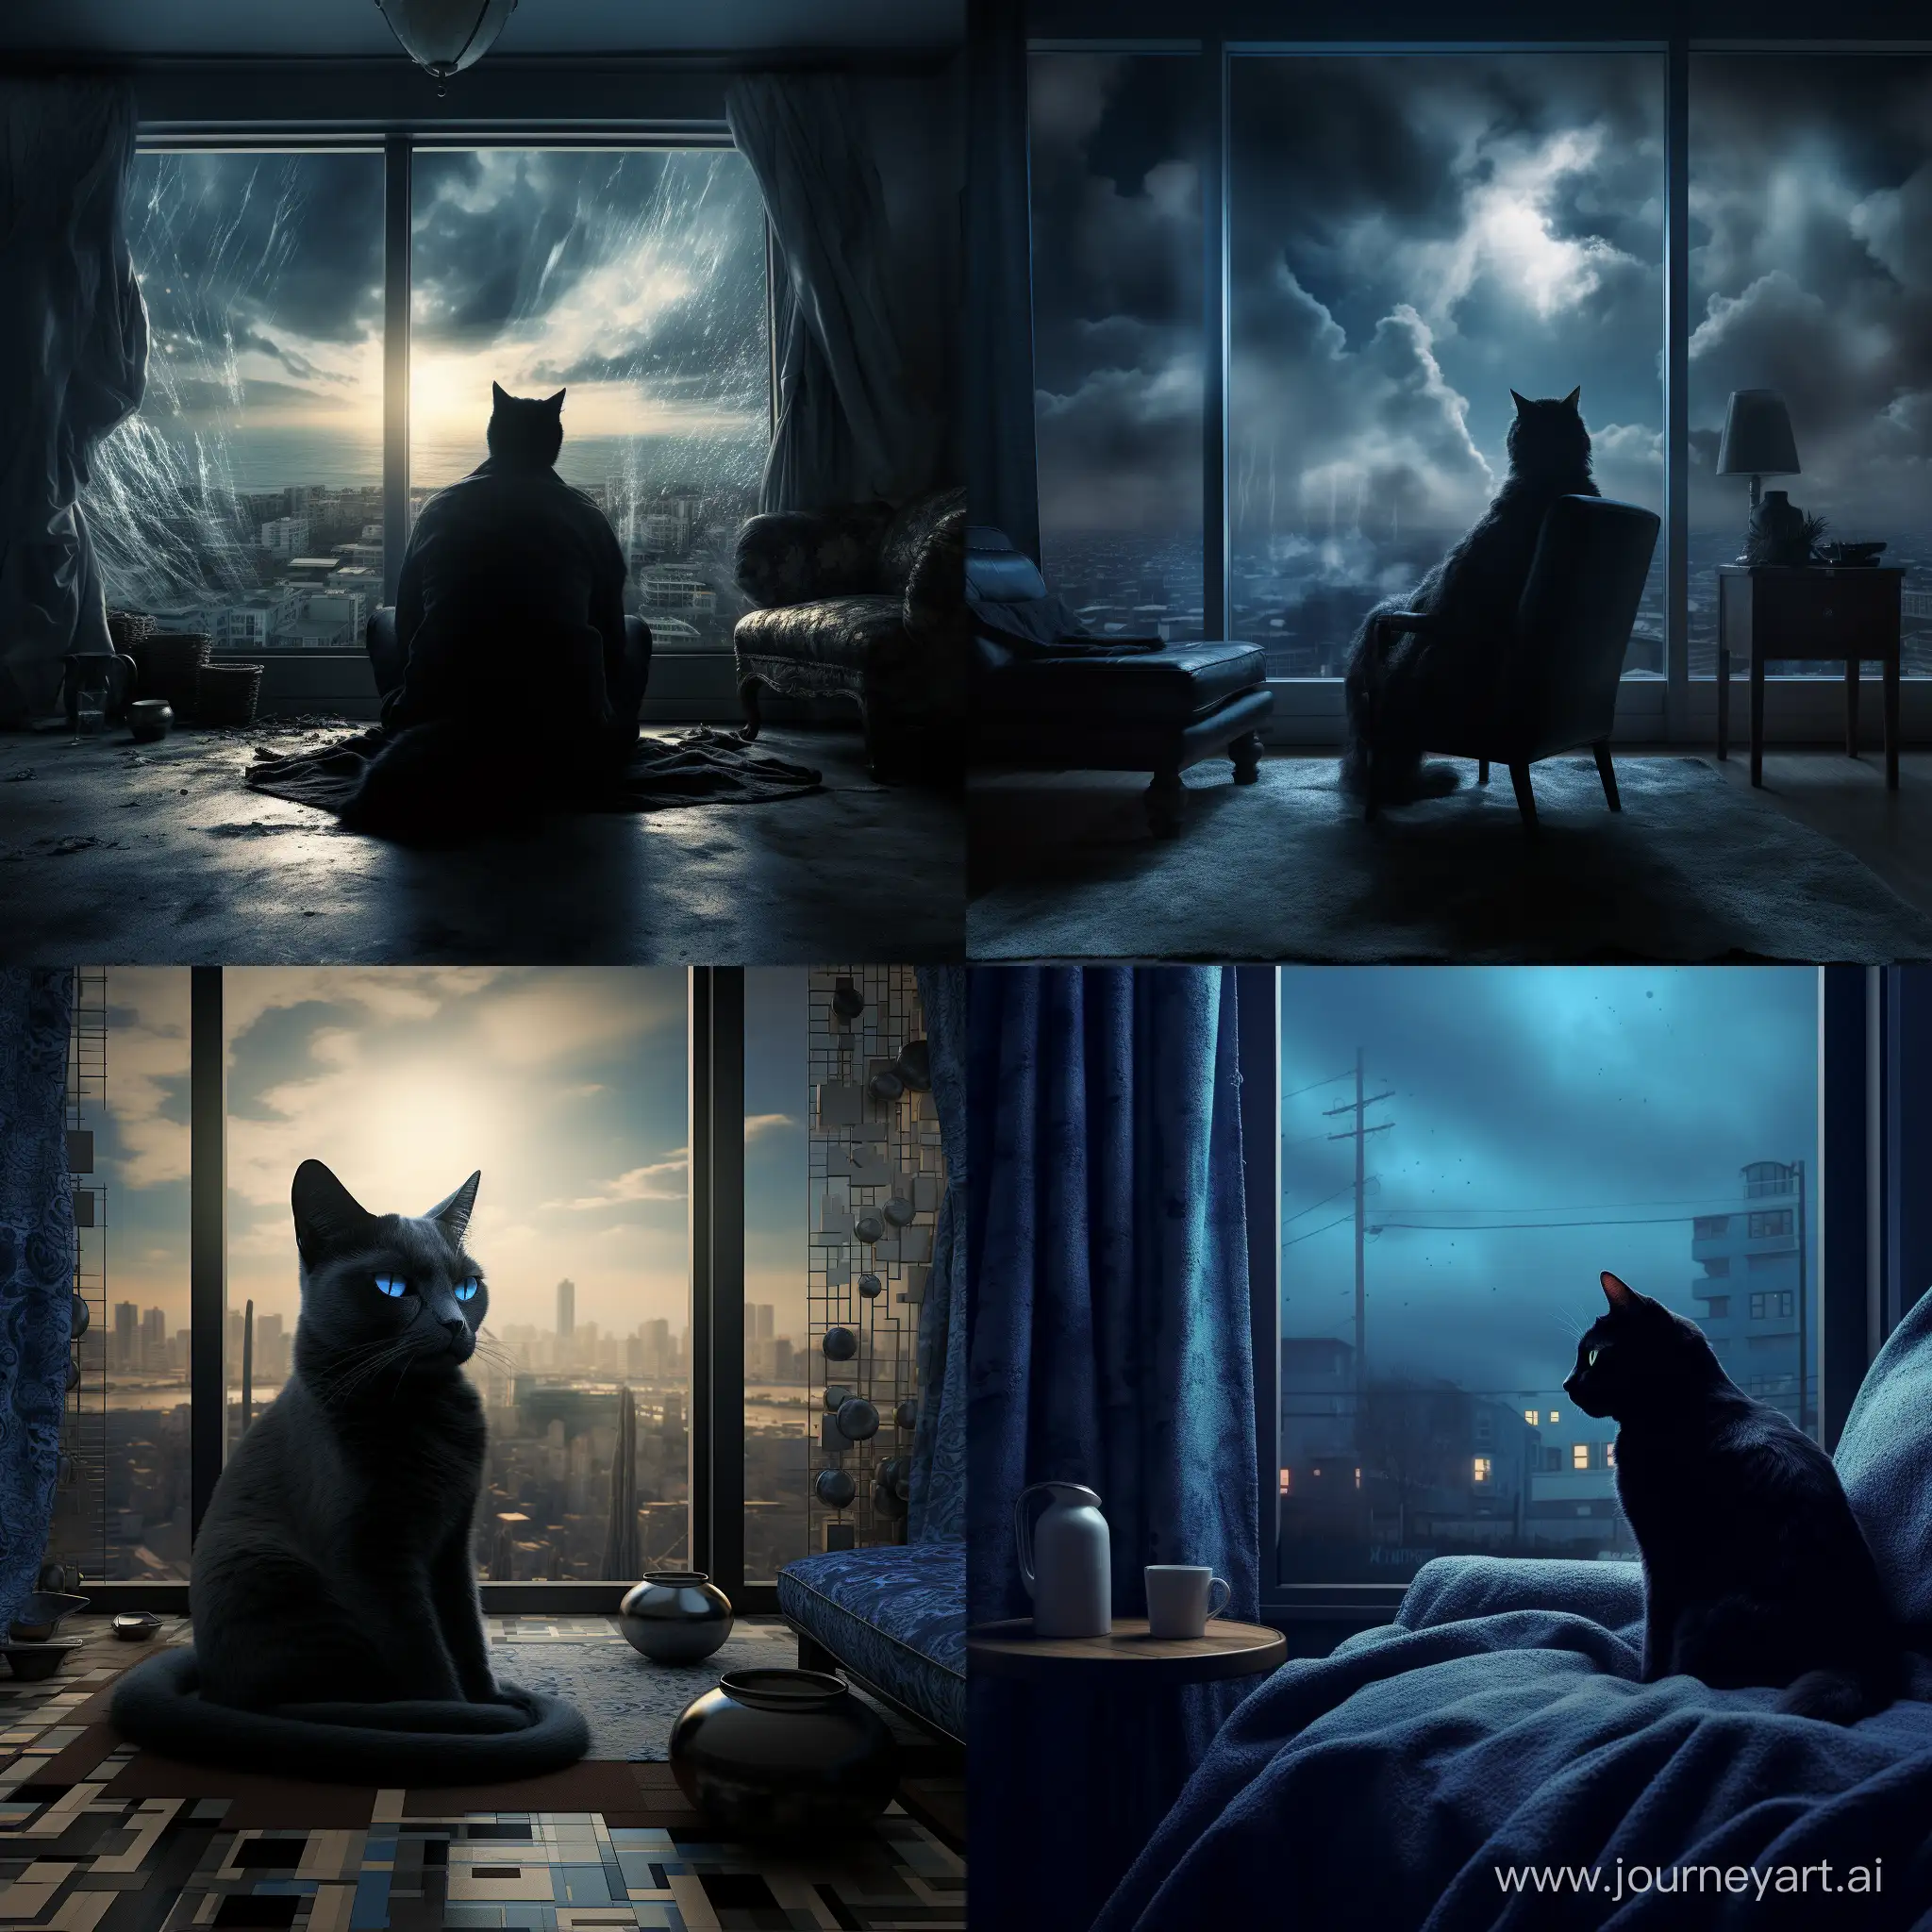 Futuristic-Movie-Poster-Blue-Cat-Lounging-on-Windowsill